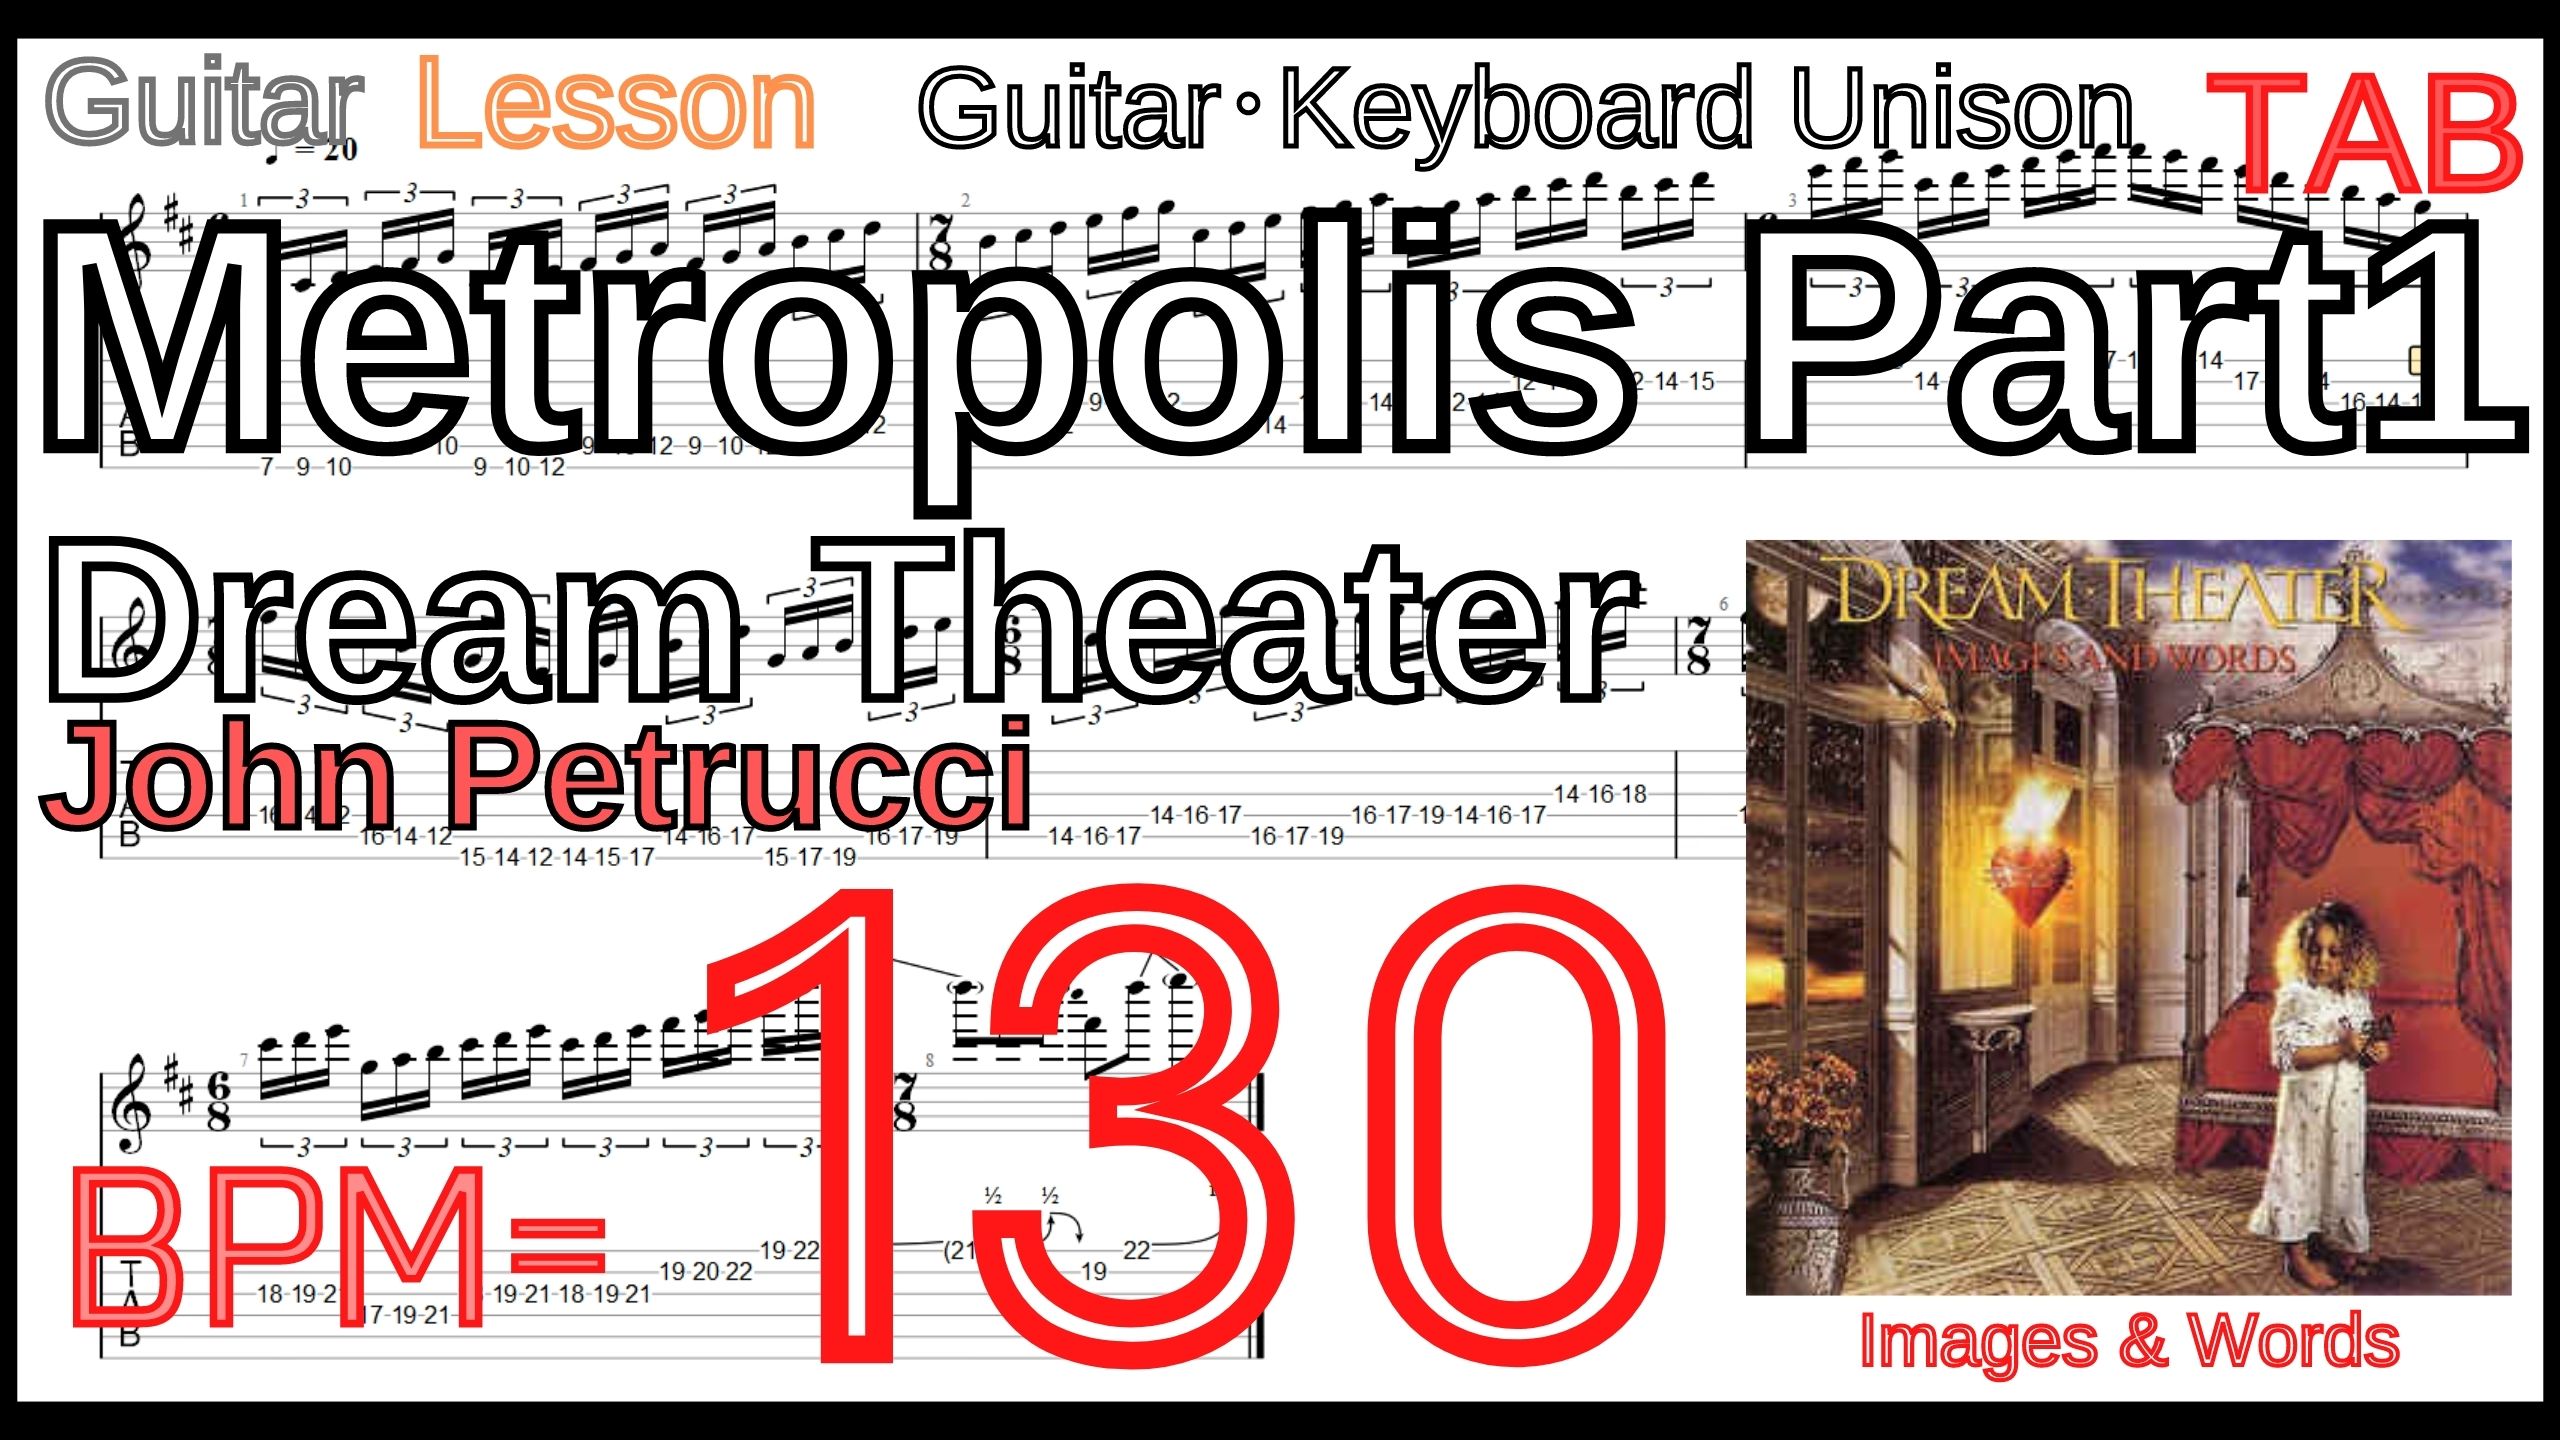 Guitar Picking Best Practice TAB5.Metropolis Part1 / Dream Theater Guitar･Keyboard Unison メトロポリス ドリームシアター ギター キーボード ユニゾン 練習 John Petrucci Lesson